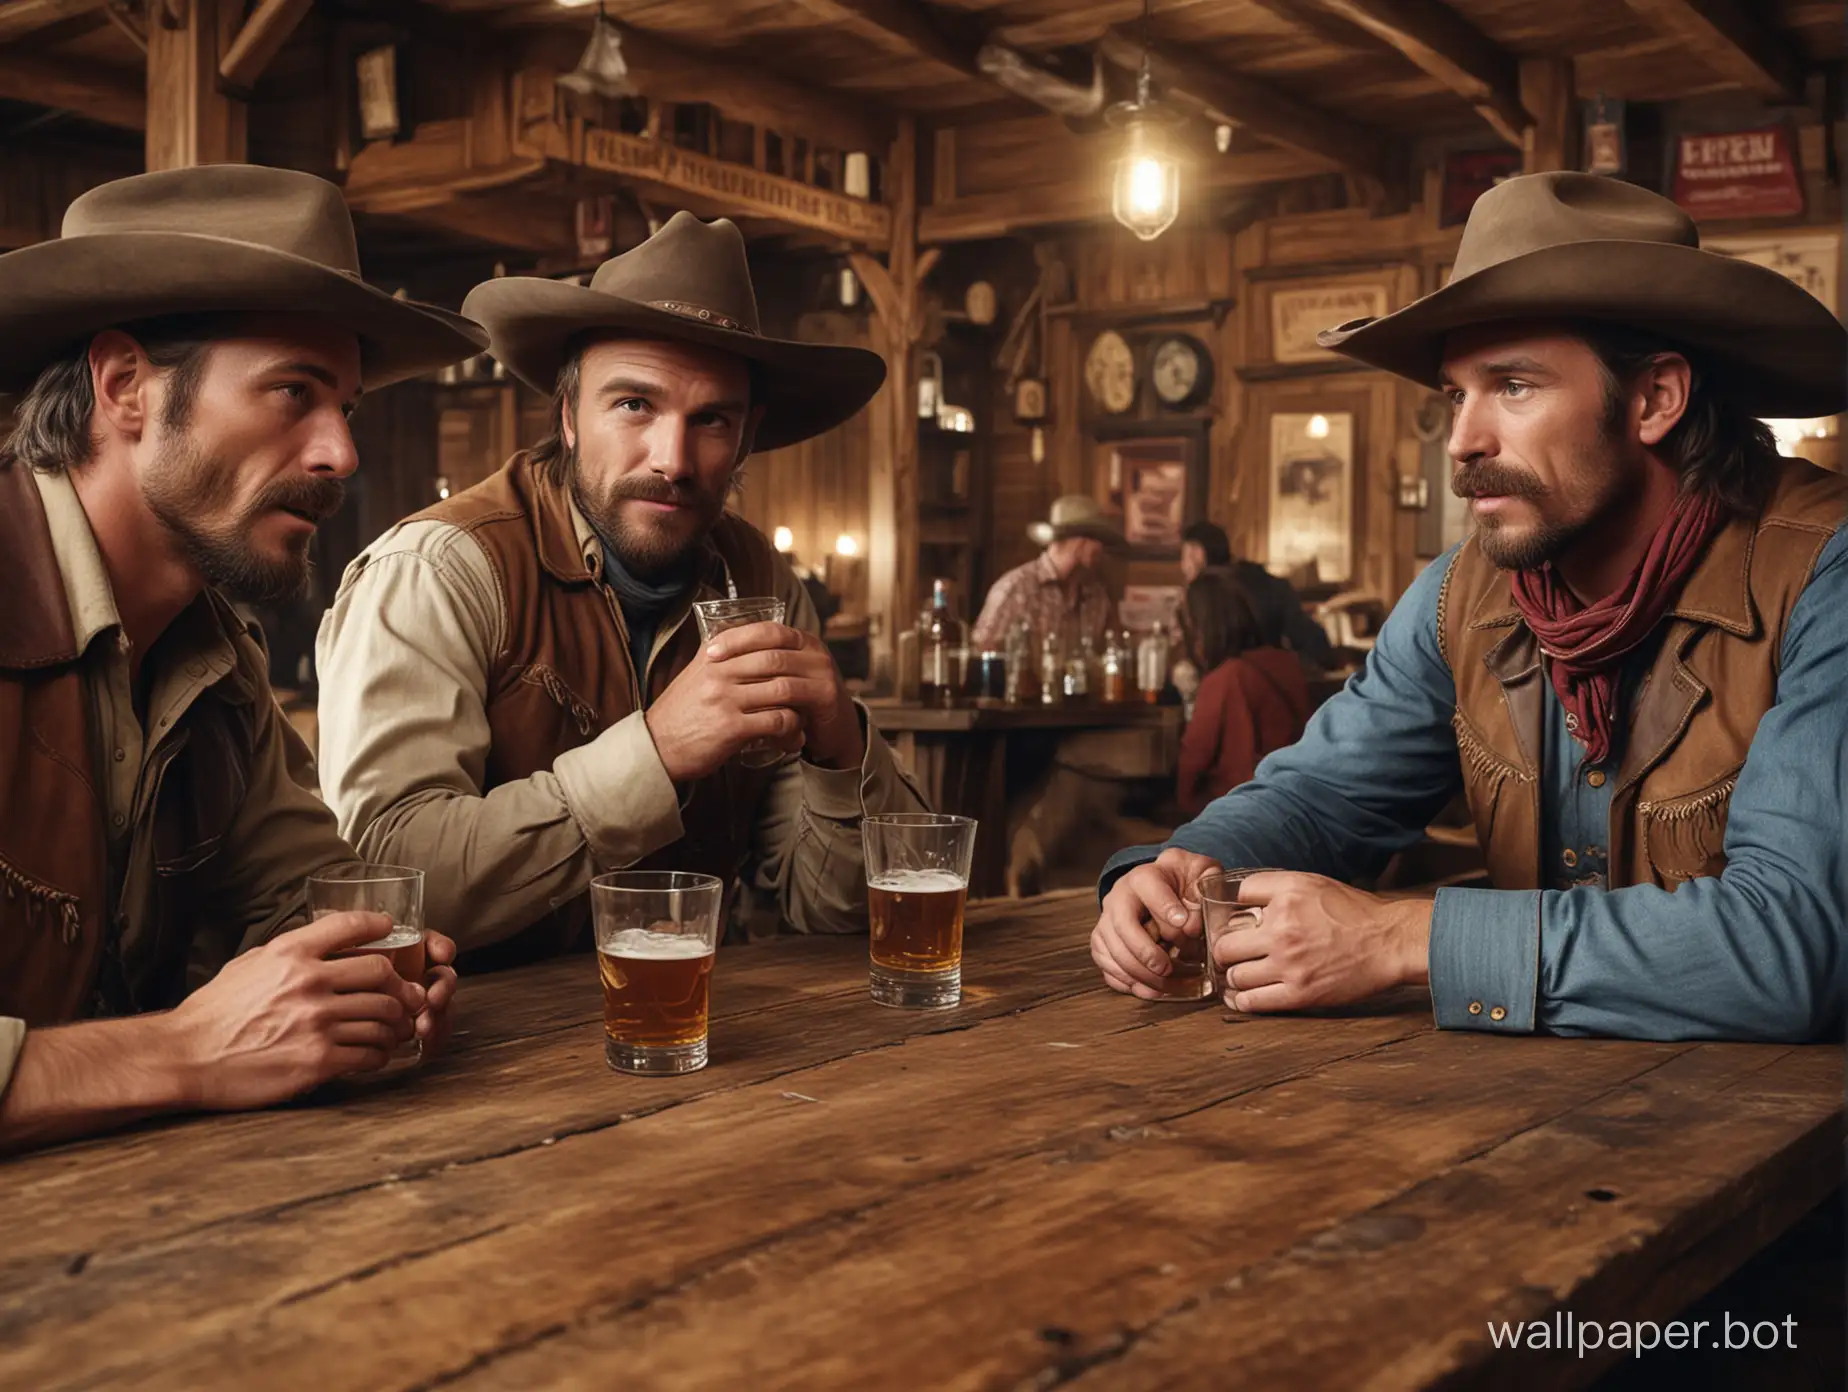 Western-Cowboys-Enjoying-Drinks-in-a-Rustic-Saloon